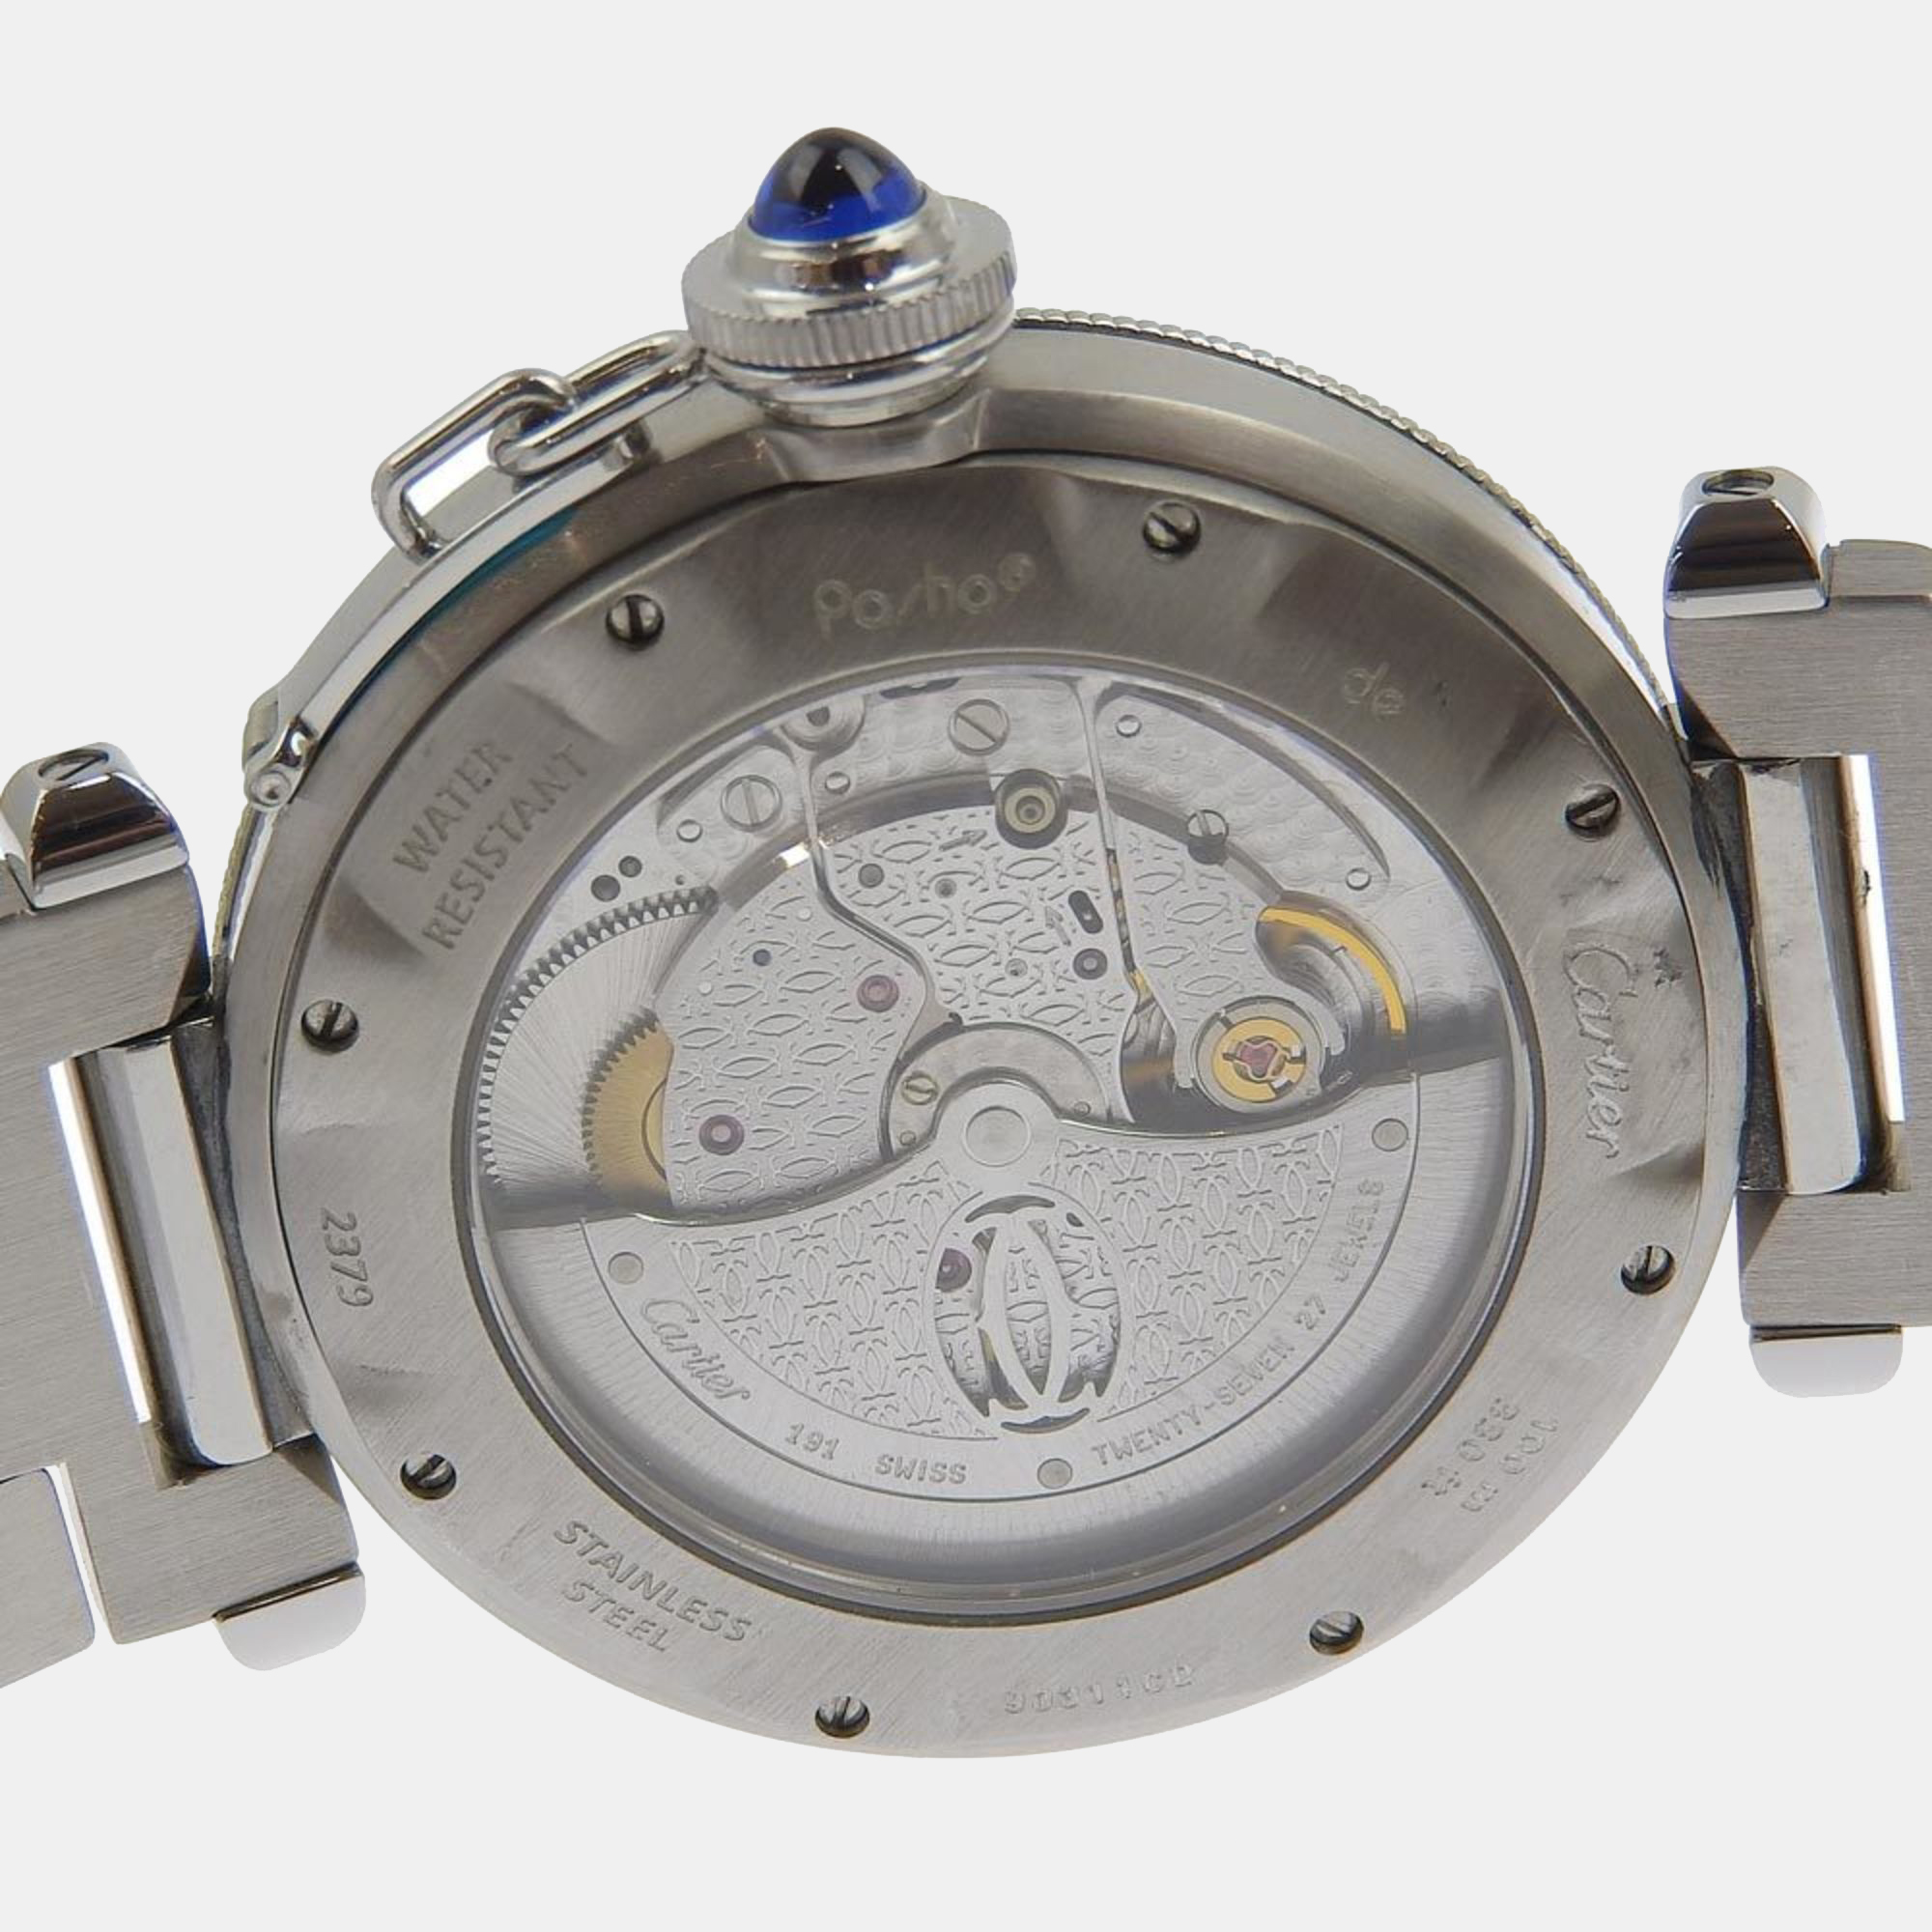 Cartier Silver Stainless Steel Pasha De Cartier W31040H3 Automatic Men's Wristwatch 38 Mm